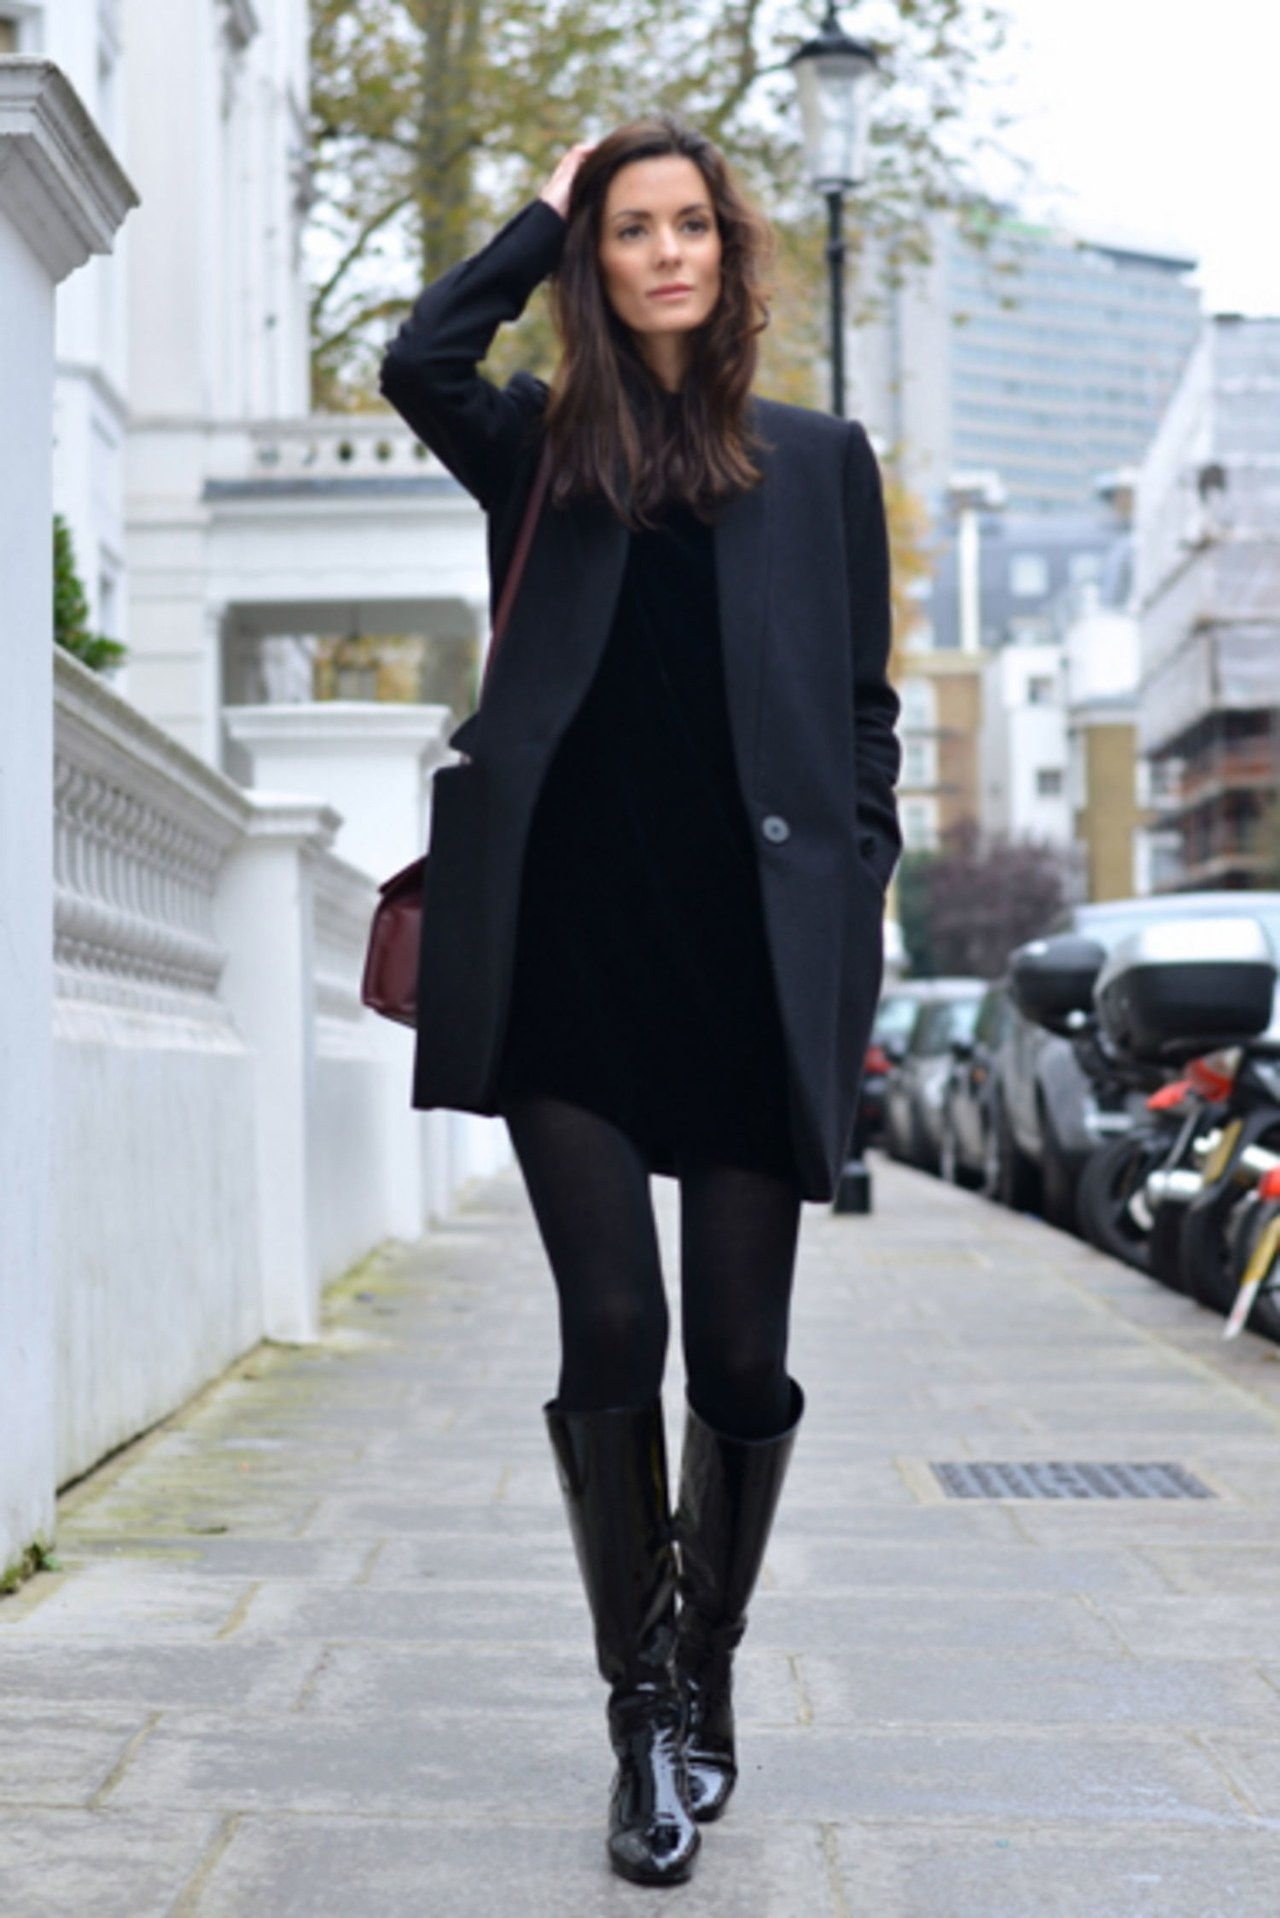 秋季 2015 knee high boots black dress blazer